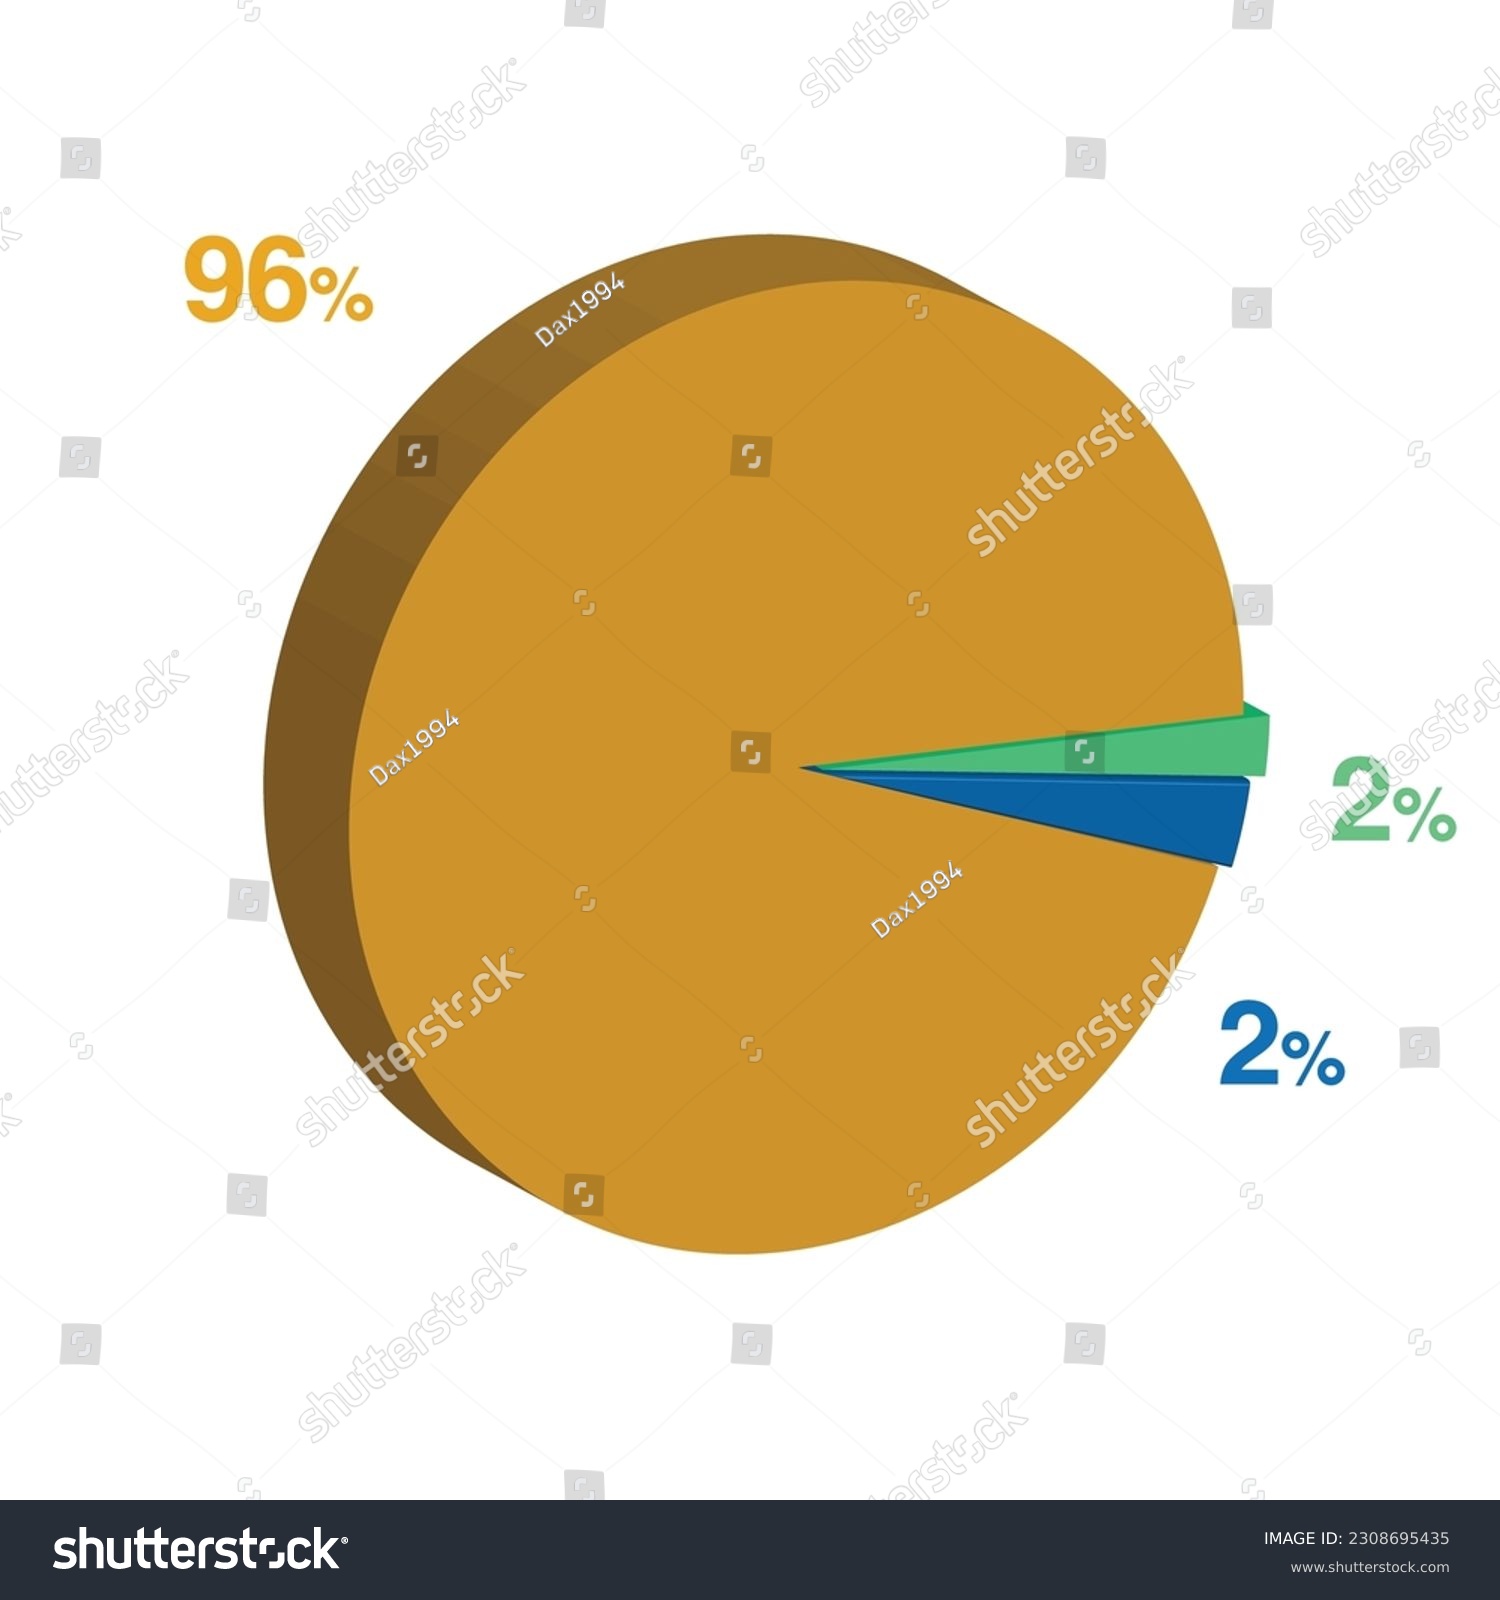 SVG of 2 2 96 percent 3d Isometric 3 part pie chart diagram for business presentation. Vector infographics illustration eps. svg